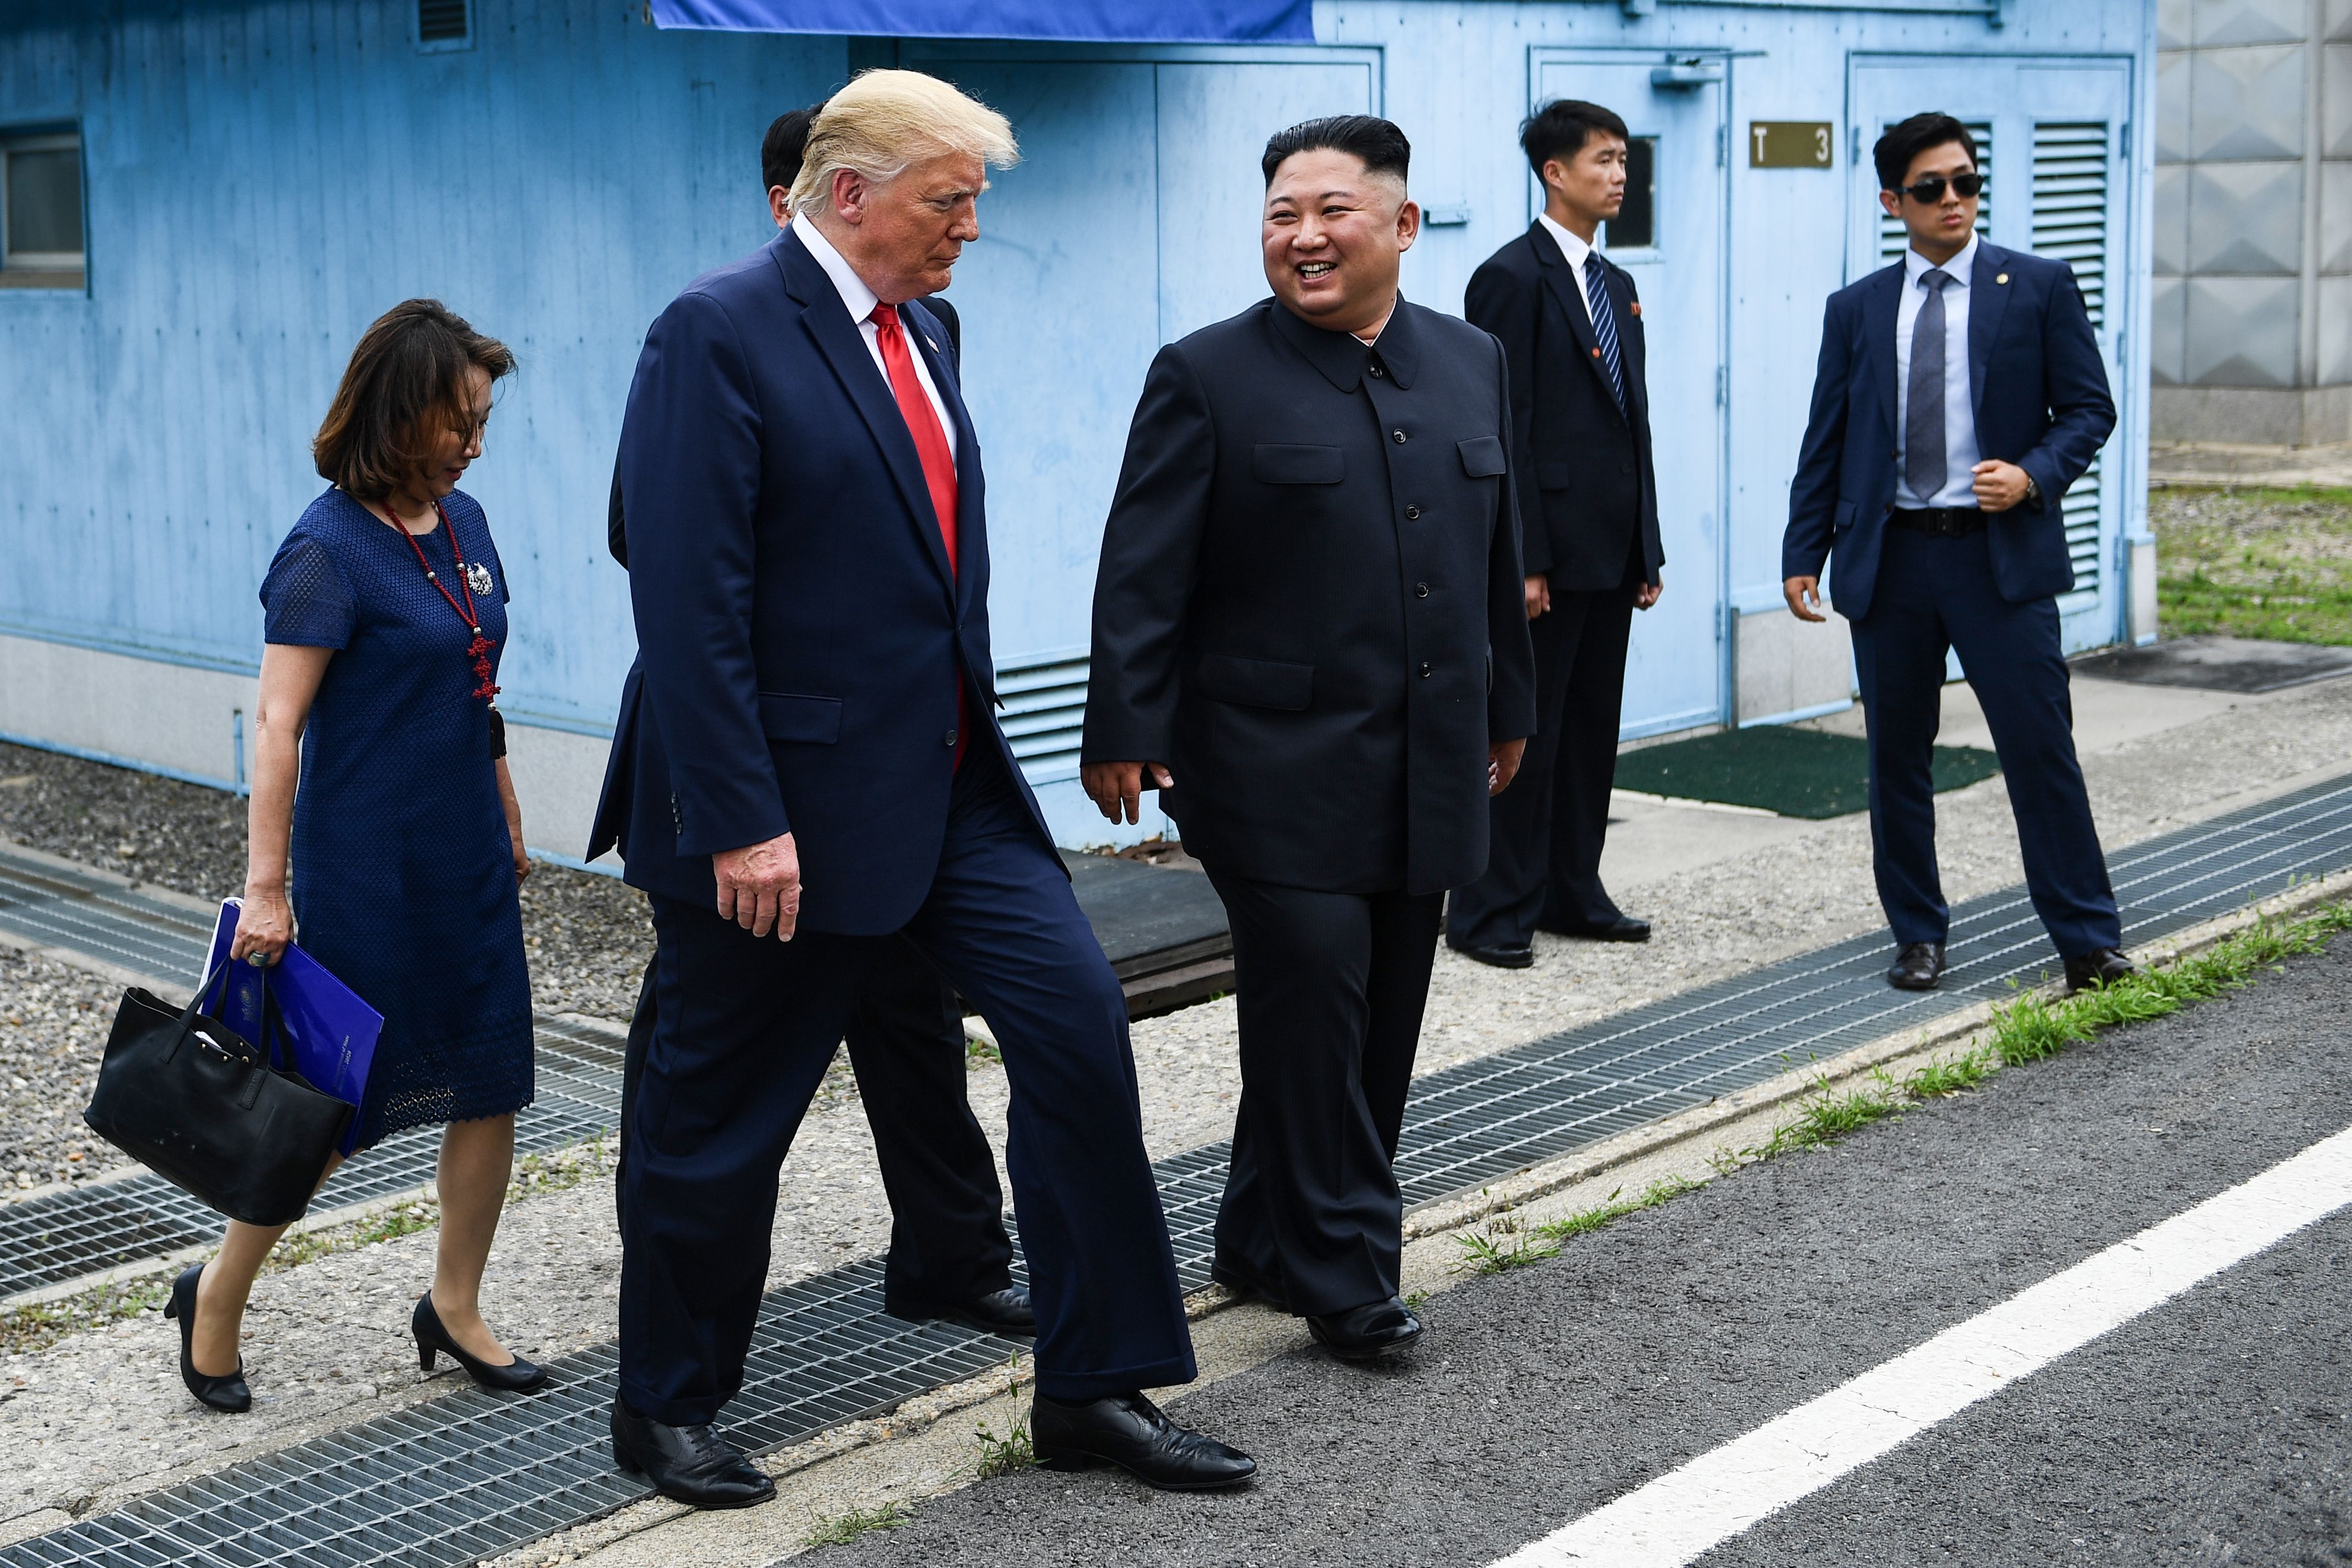 North Korea's leader Kim Jong Un and US President Donald Trump walk together into North Korean territory at the DMZ.